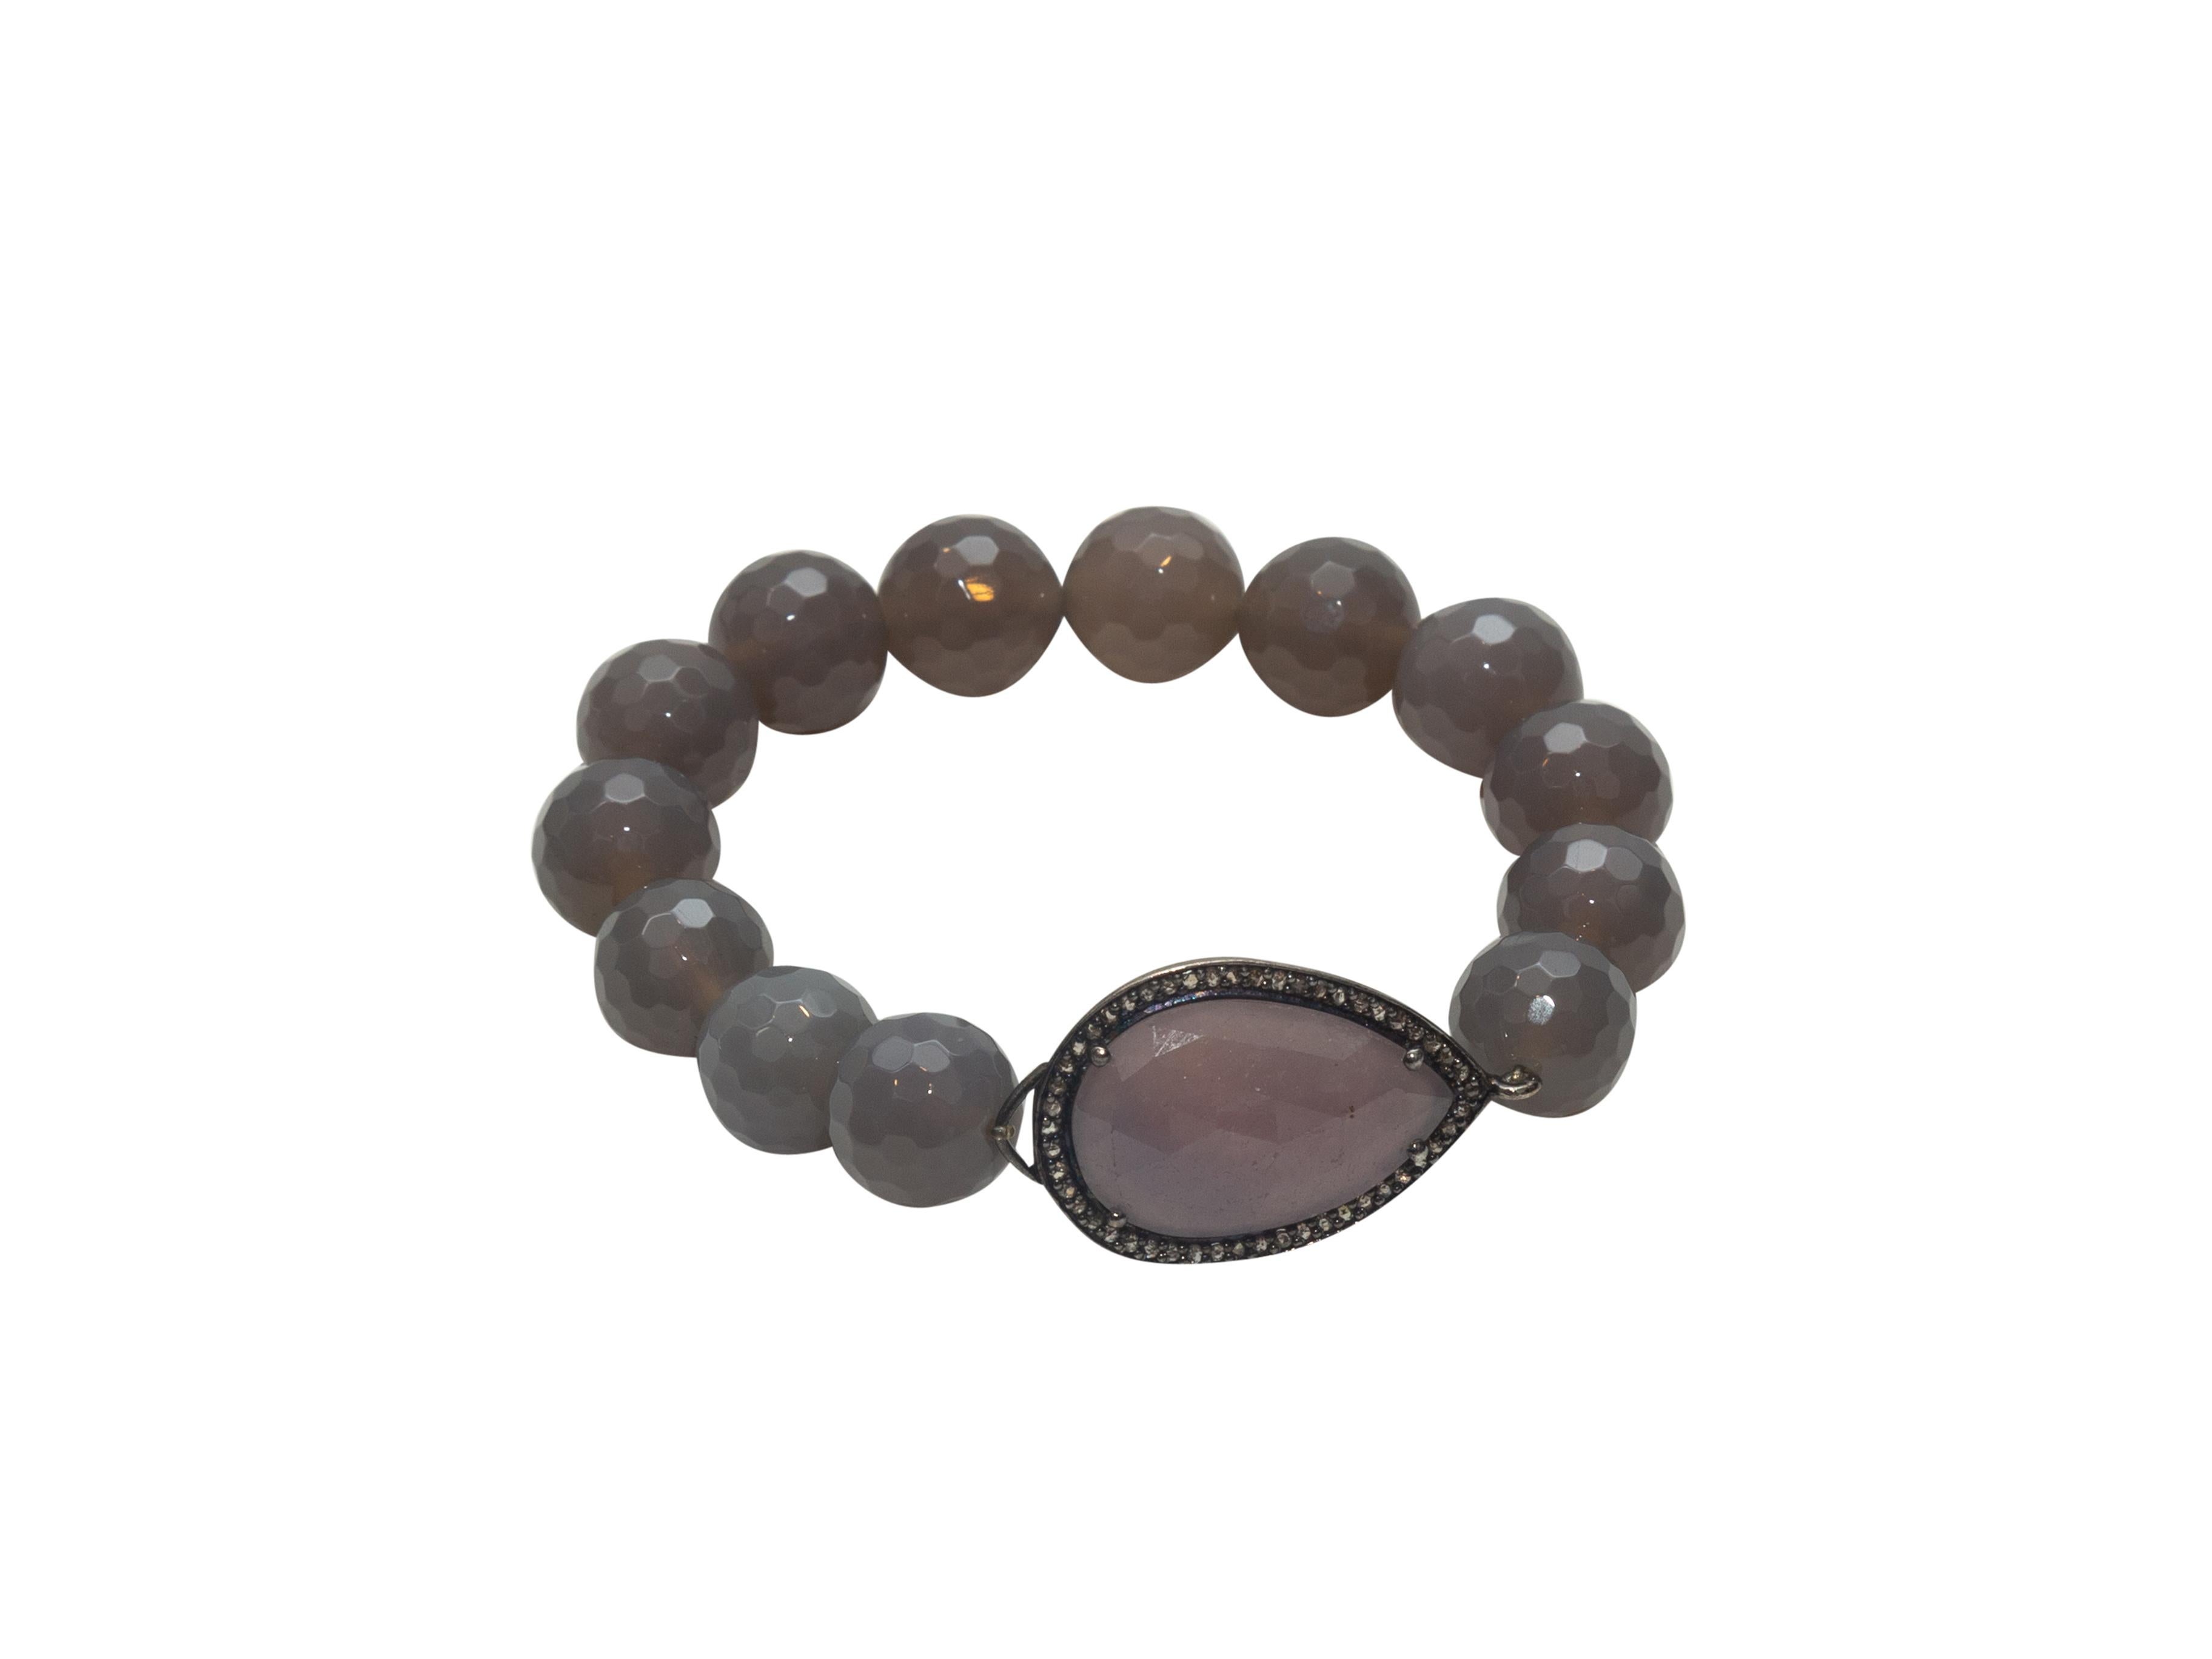 Product details: Mauve agate and diamond stretch bead bracelet by Bavna. 9